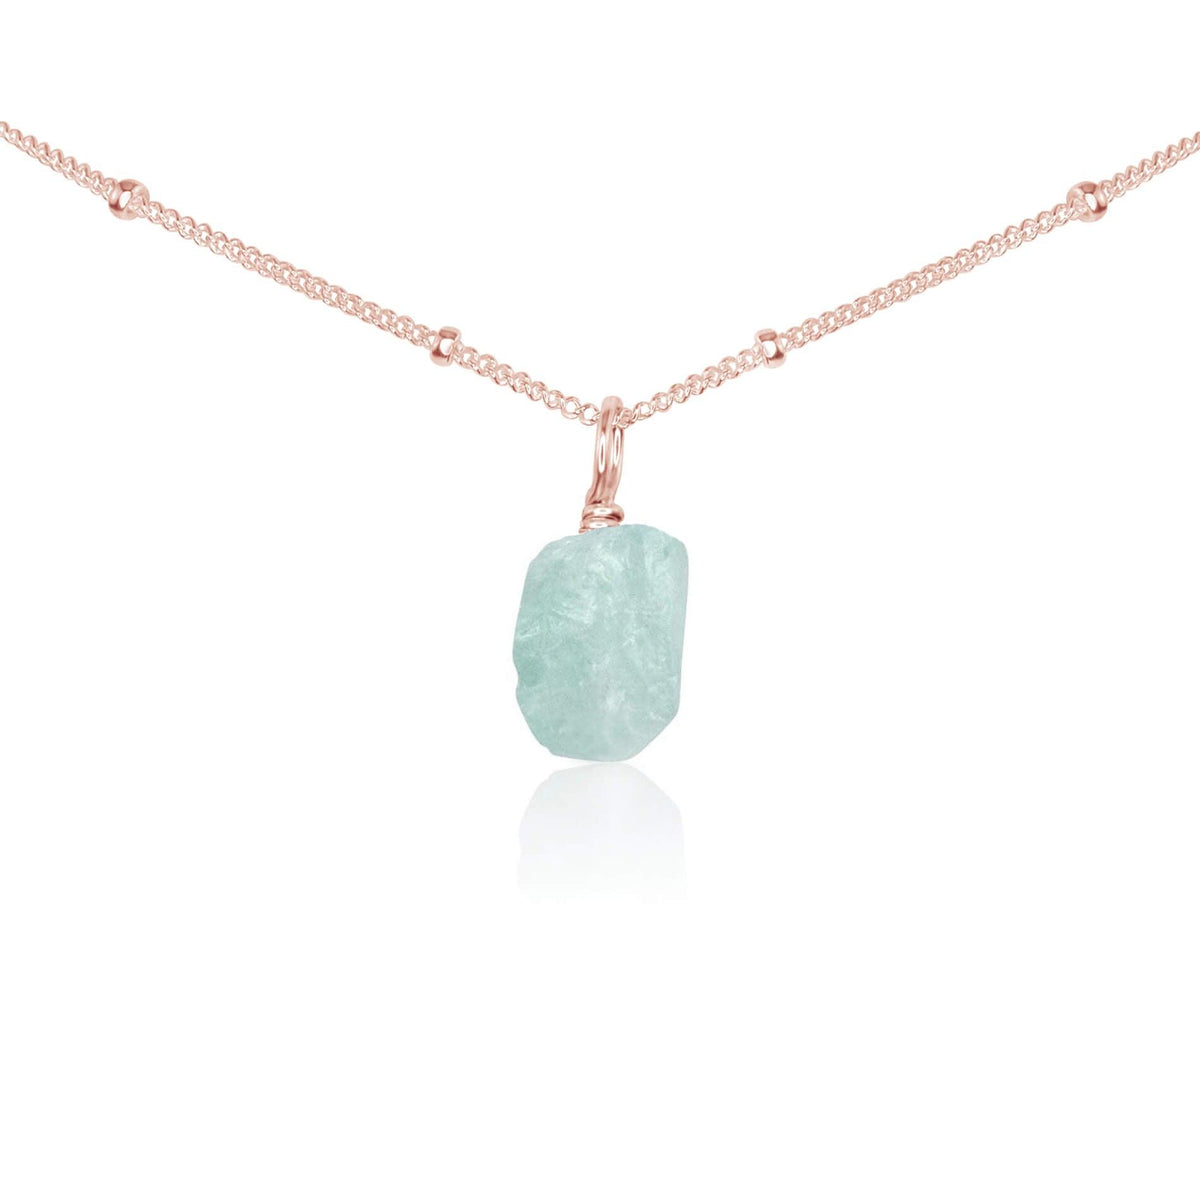 Tiny Rough Aquamarine Gemstone Pendant Choker - Tiny Rough Aquamarine Gemstone Pendant Choker - 14k Rose Gold Fill / Satellite - Luna Tide Handmade Crystal Jewellery